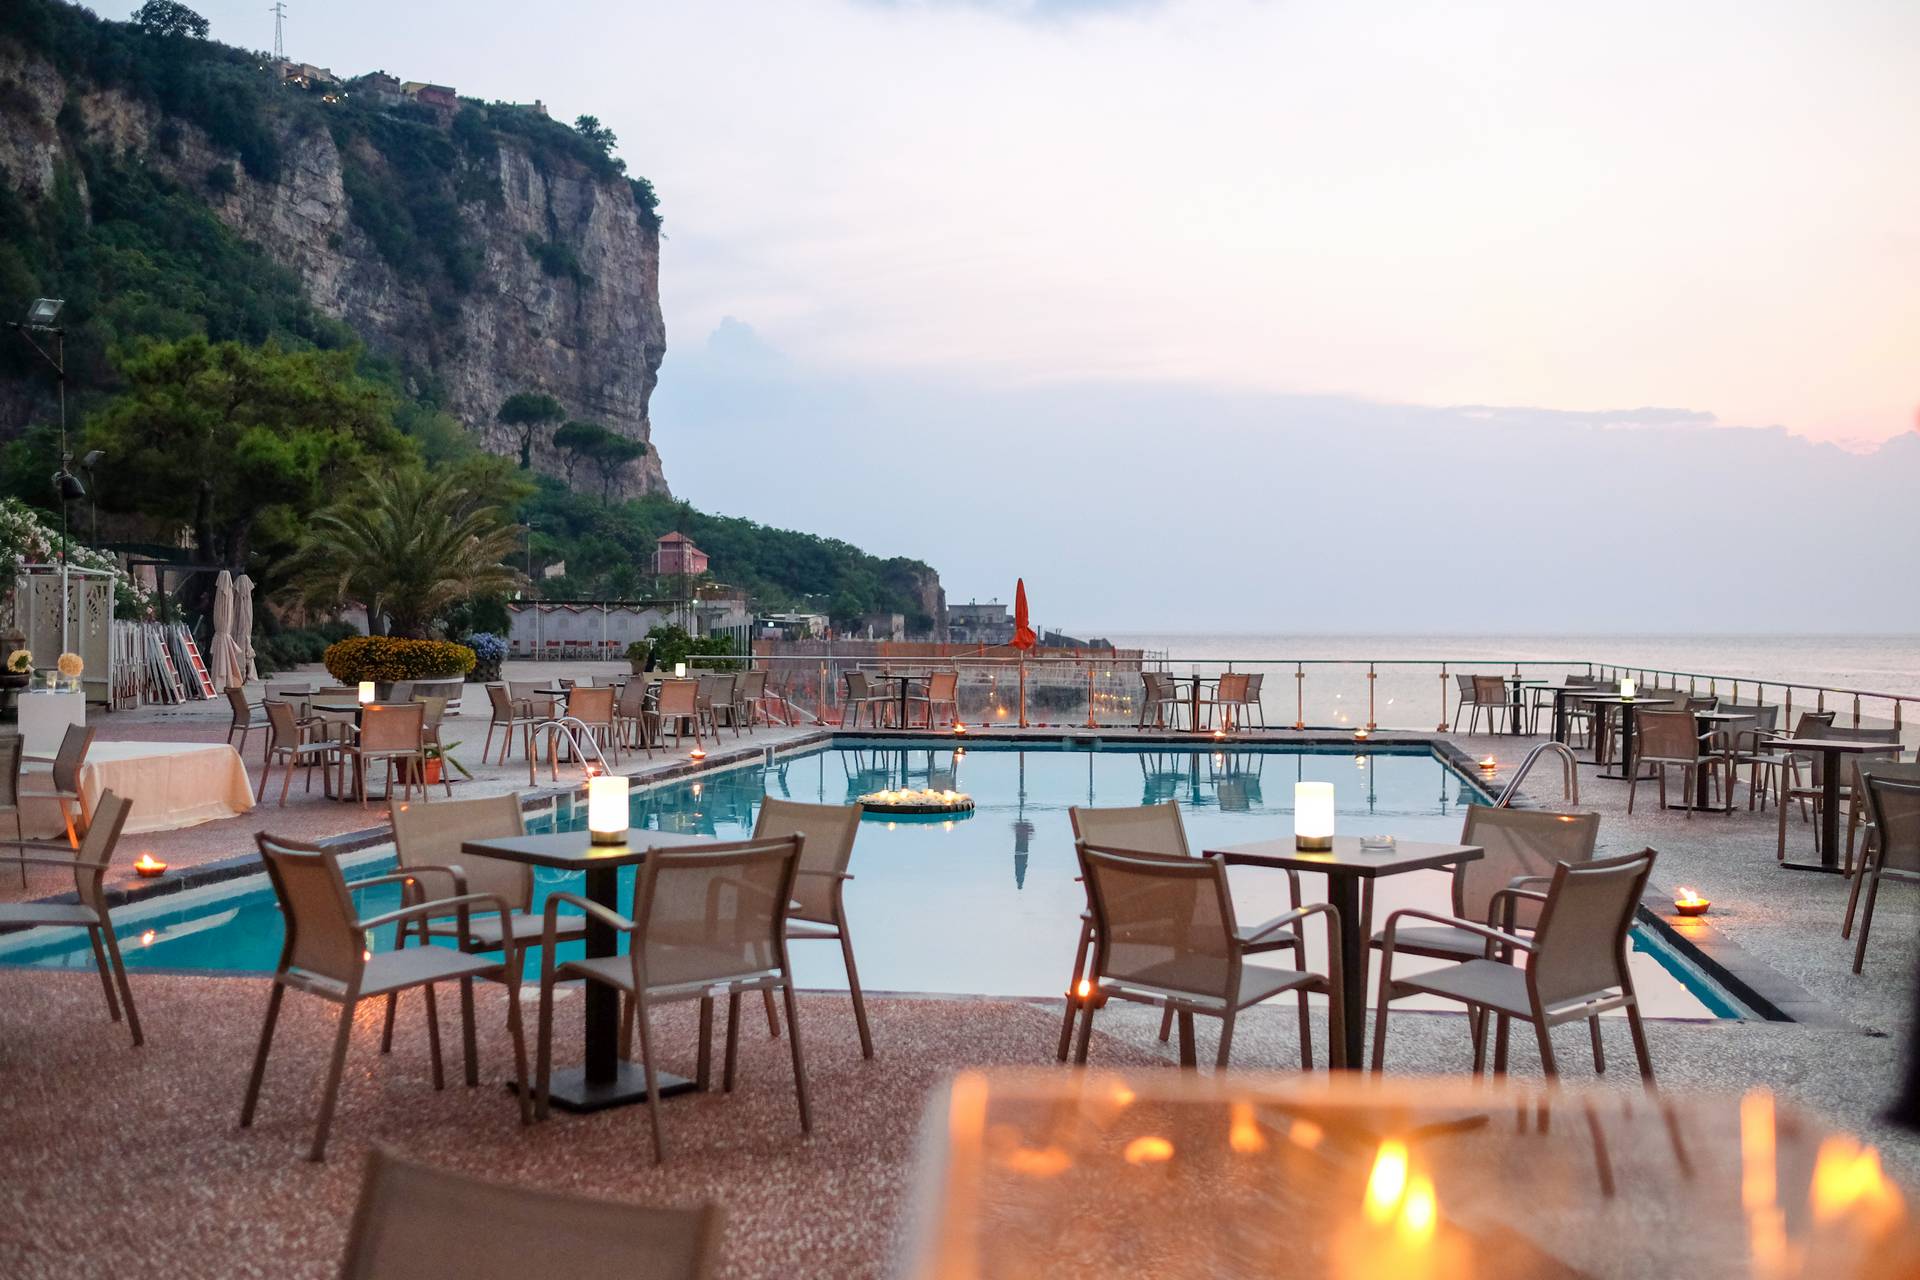 Le Axidie Resort Hotel Rooms Sorrento Coast Vico Equense Wedding Matrimonio pineta piscina 07